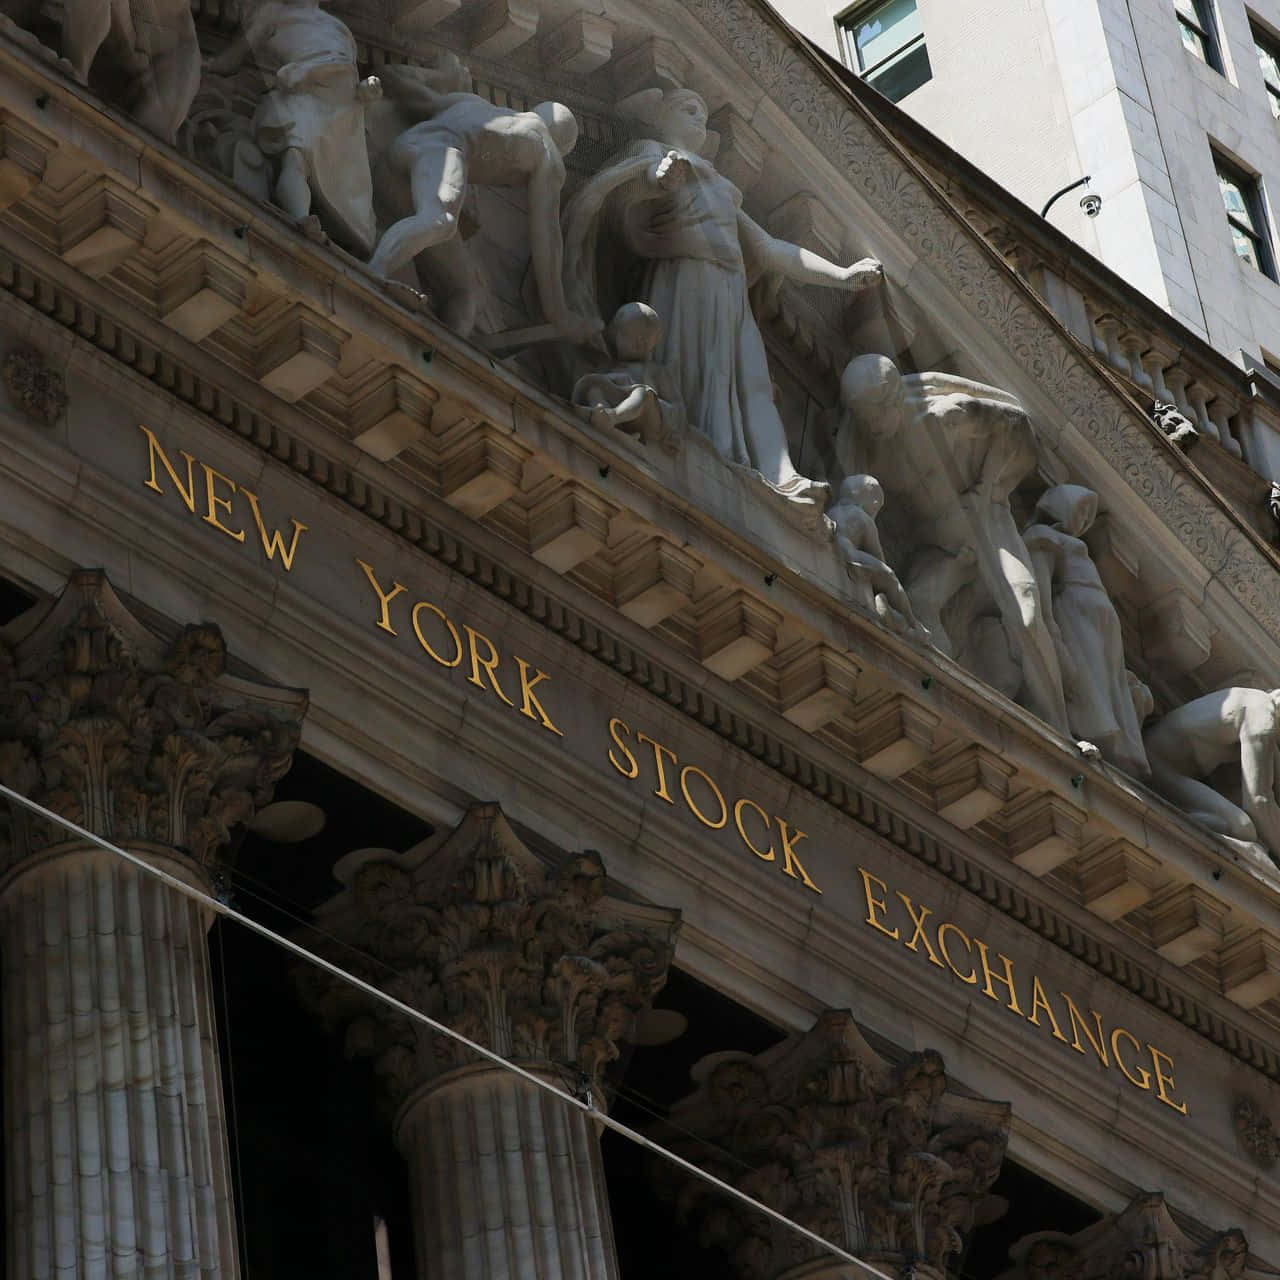 NY Stock Exchange pictures